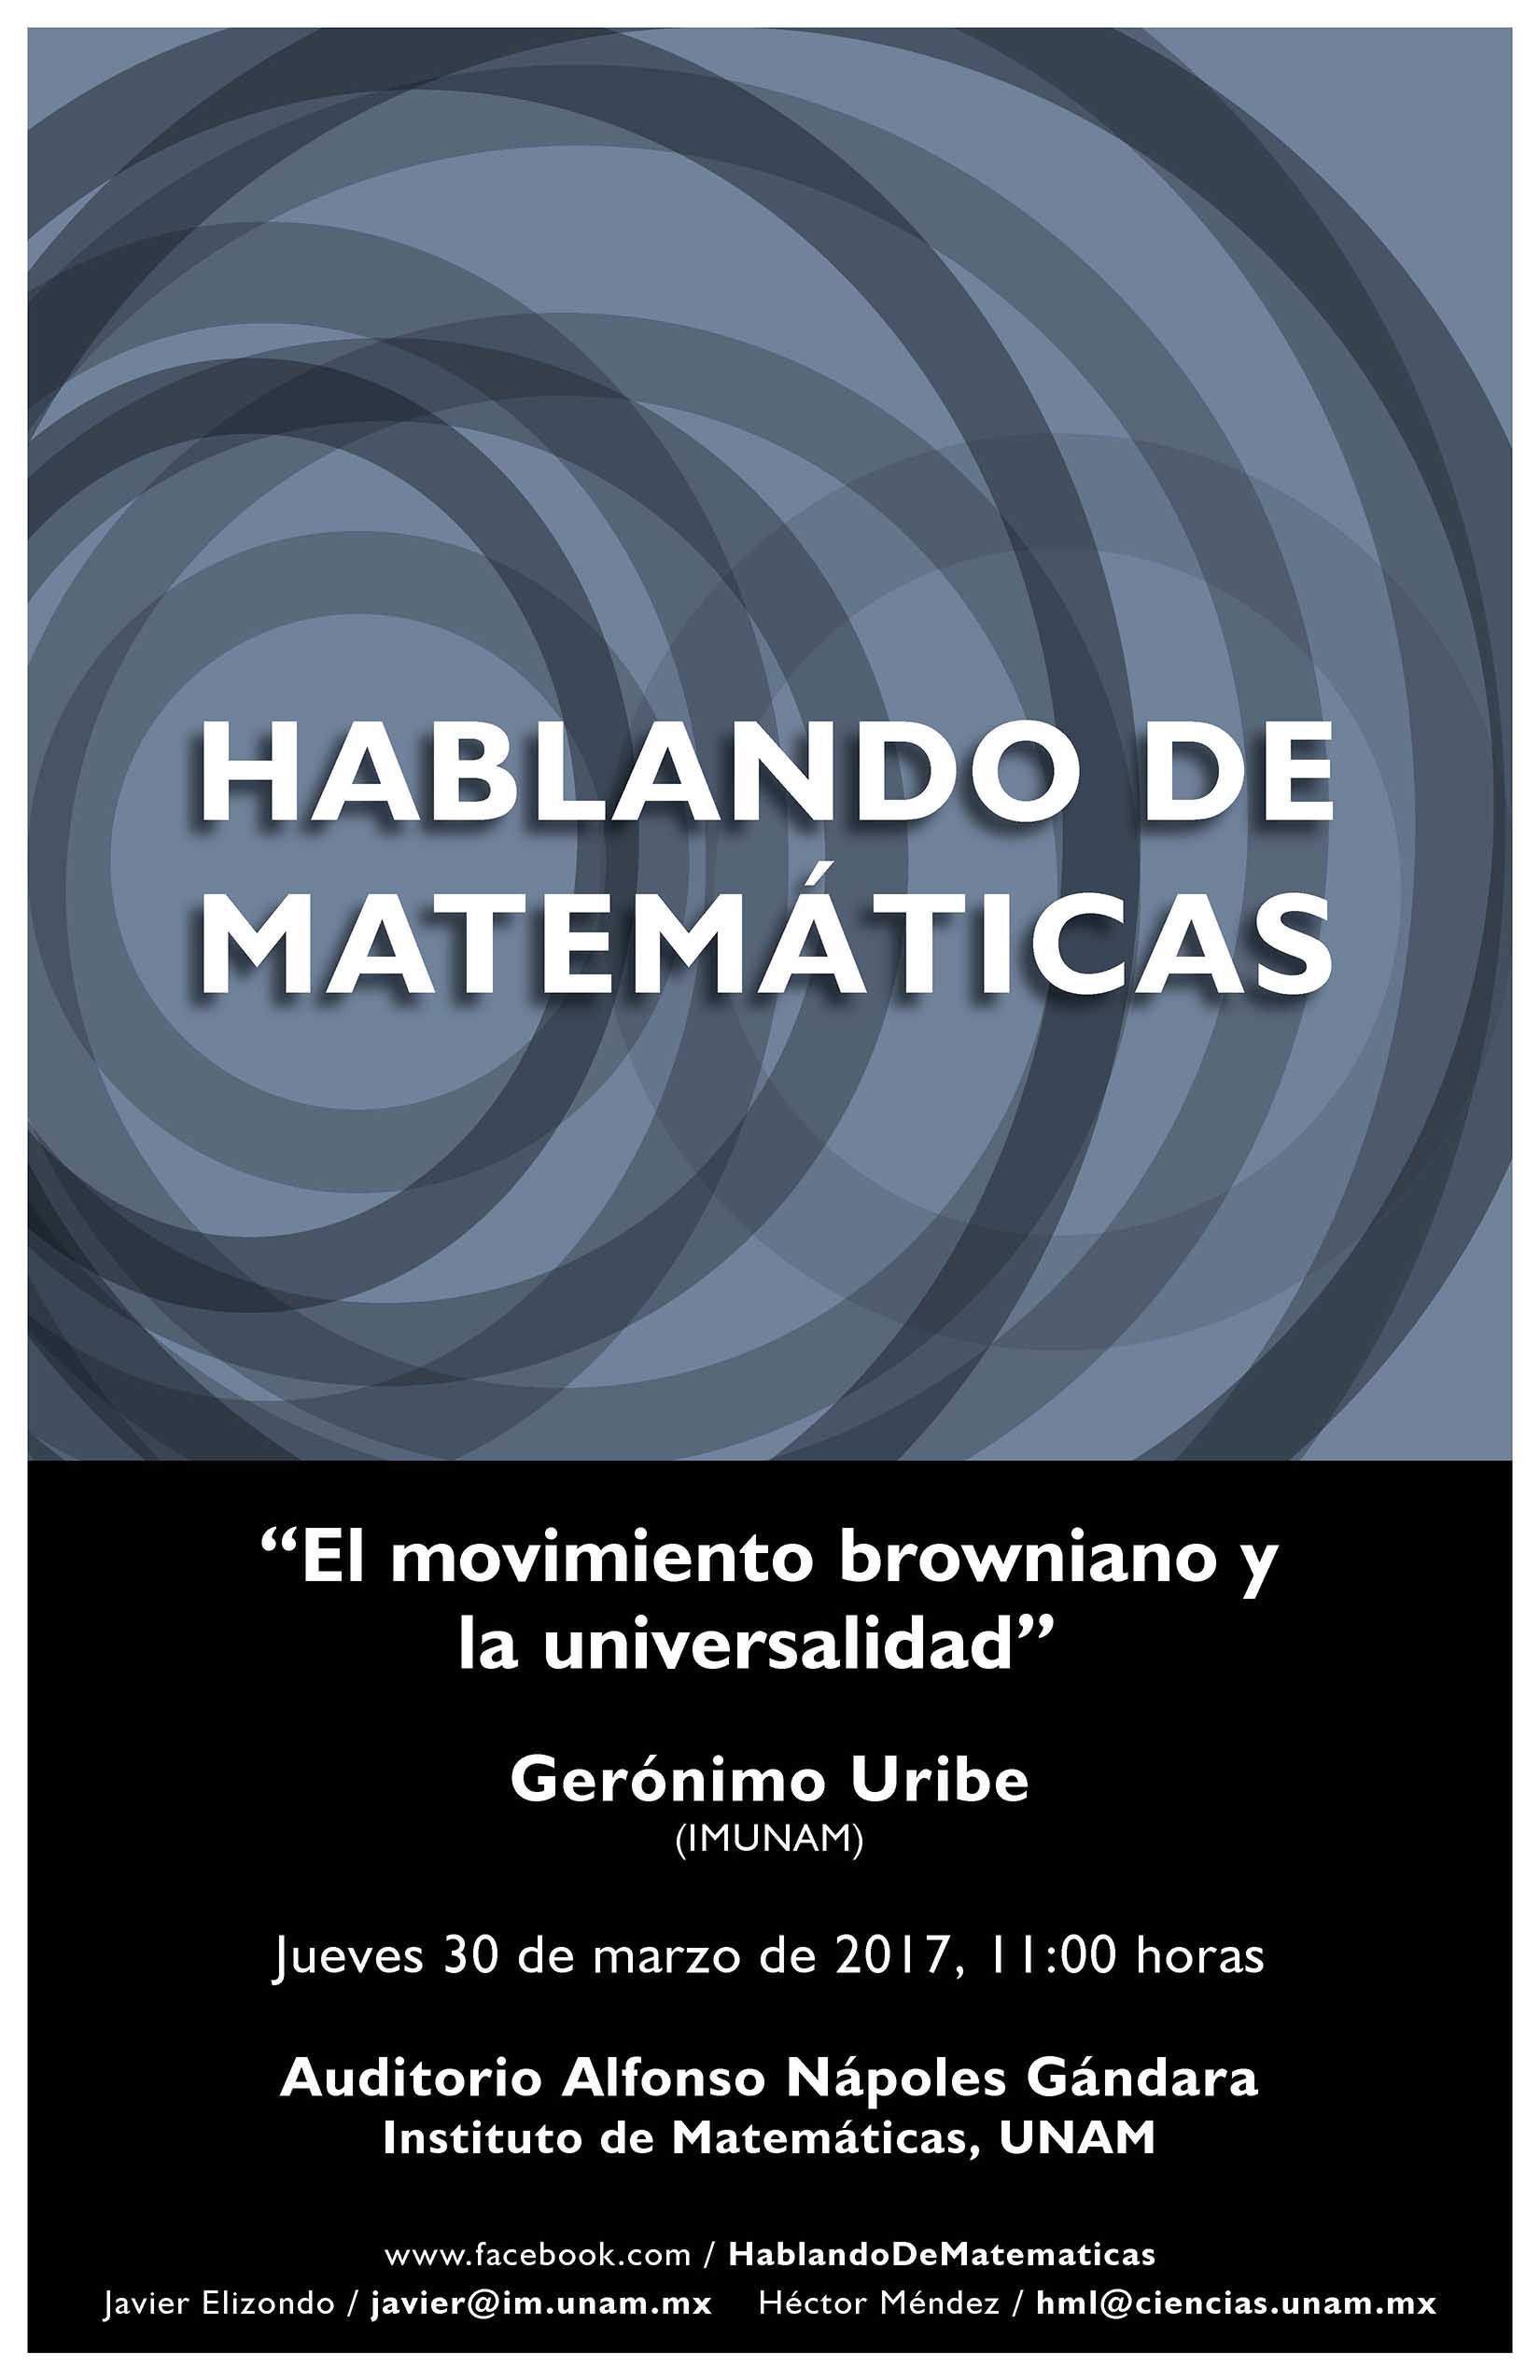 Hablando de Matemáticas: Gerónimo Uribe, IMUNAM